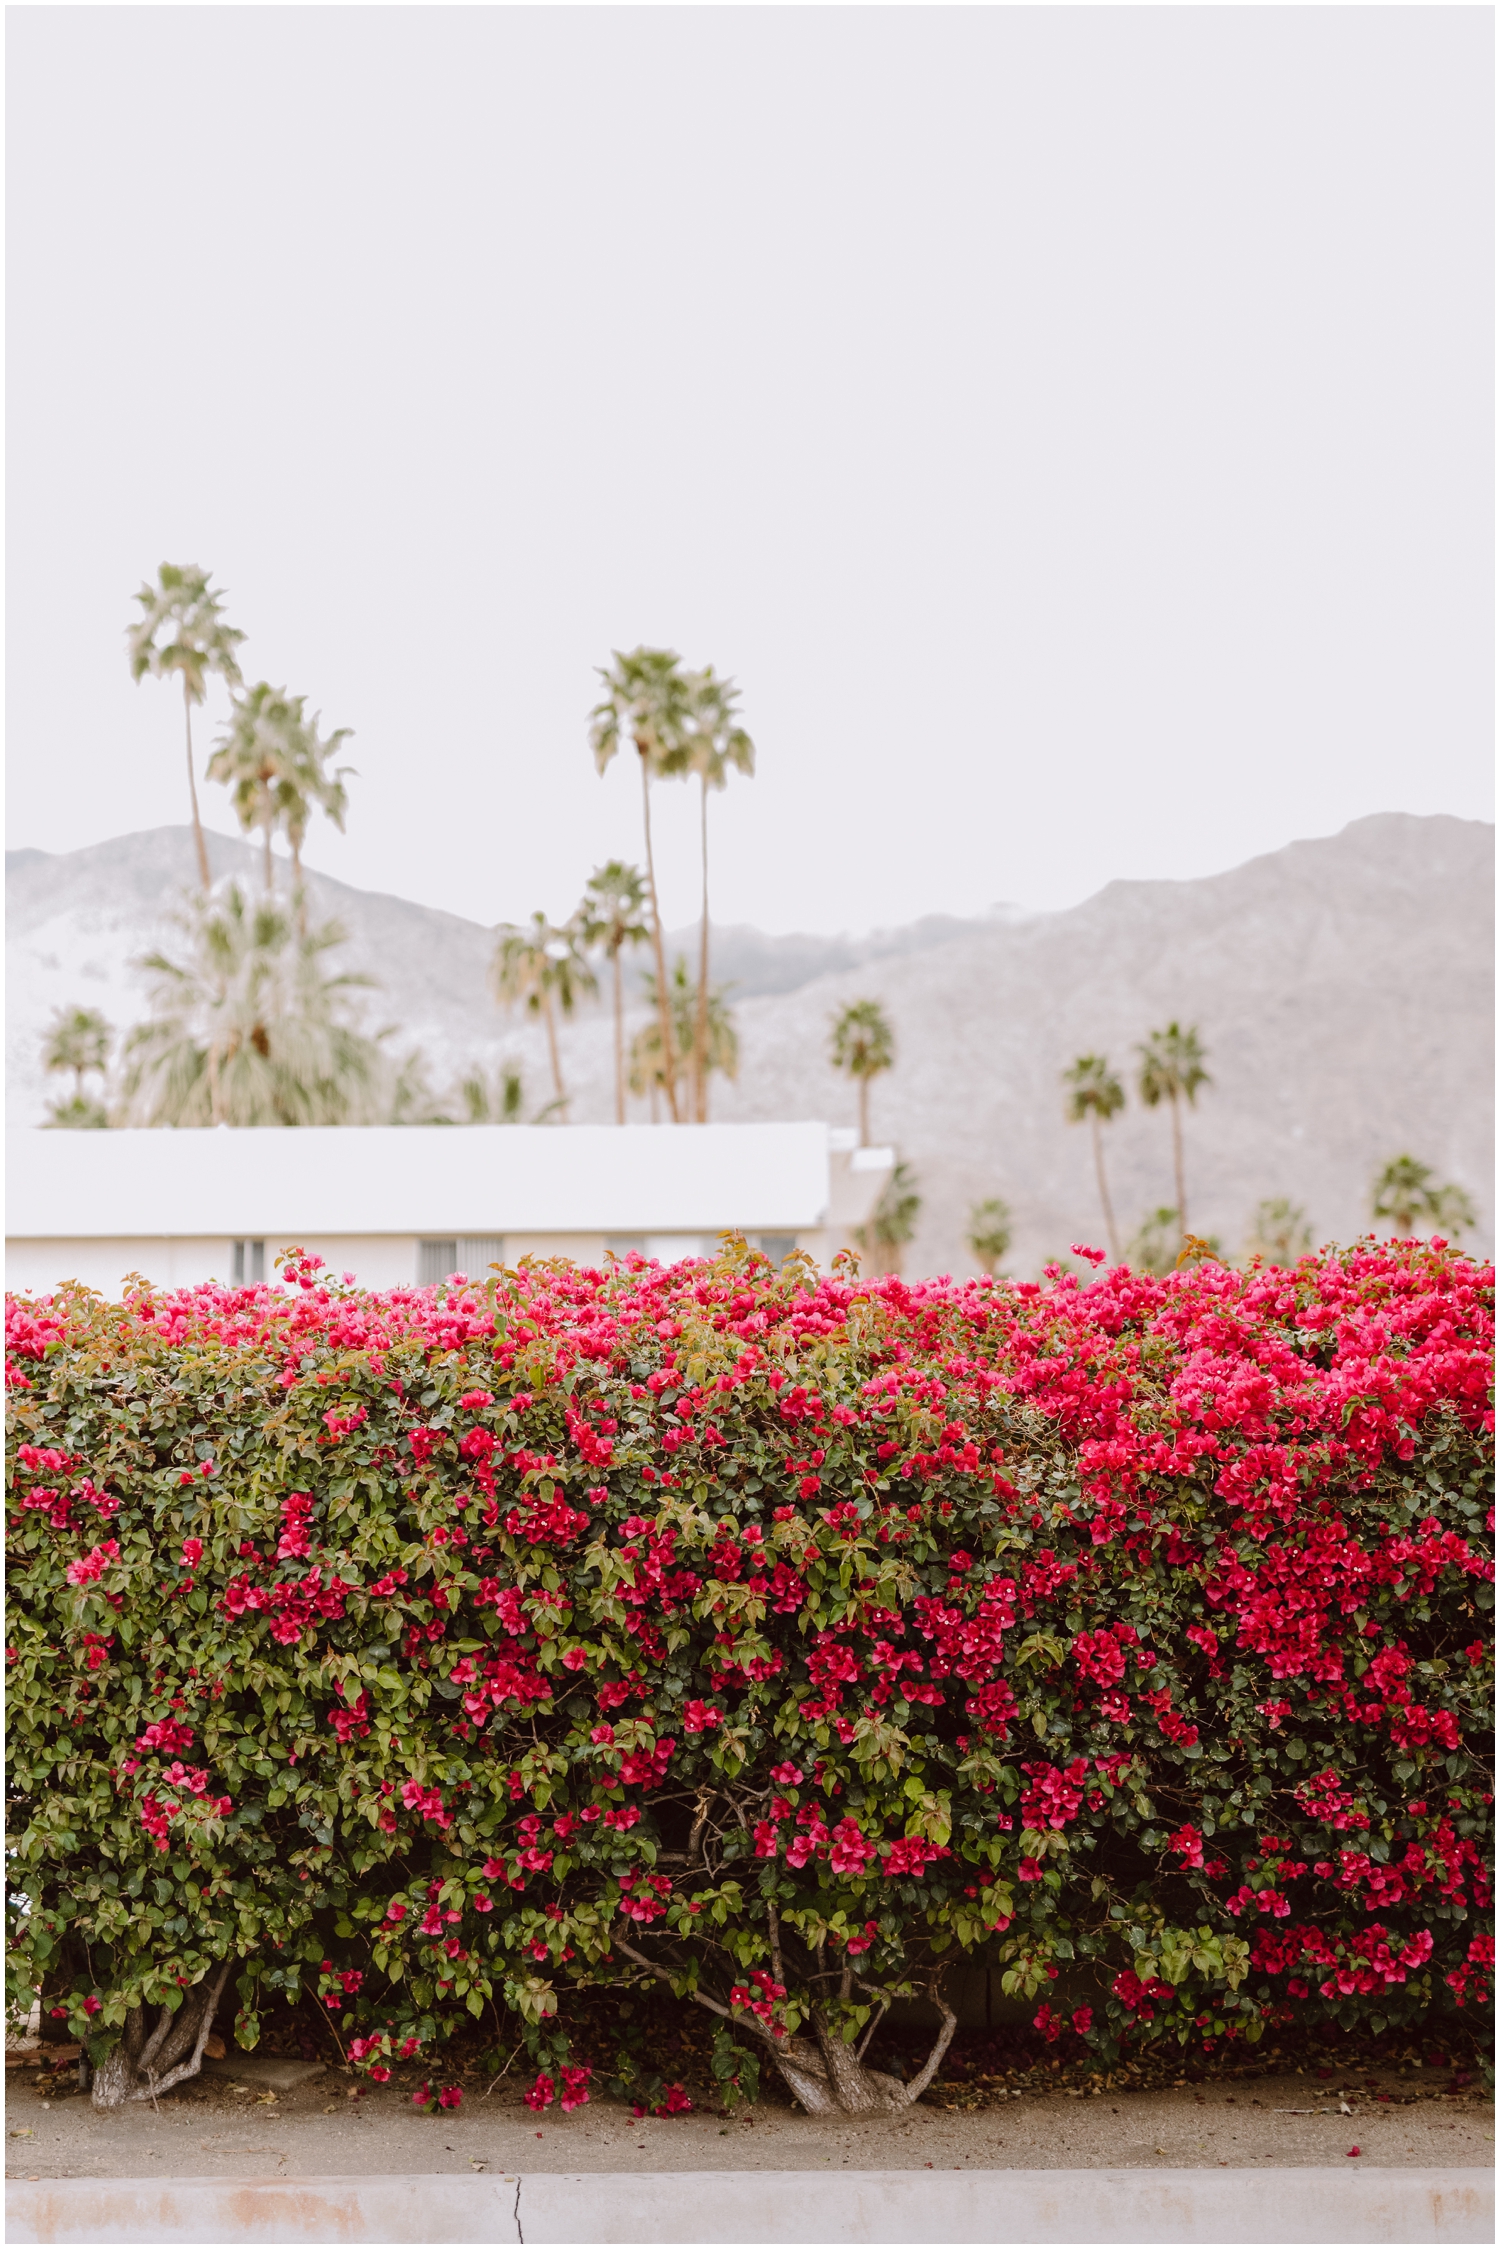 colorful flowers at palm springs wedding venue hotel saguaro